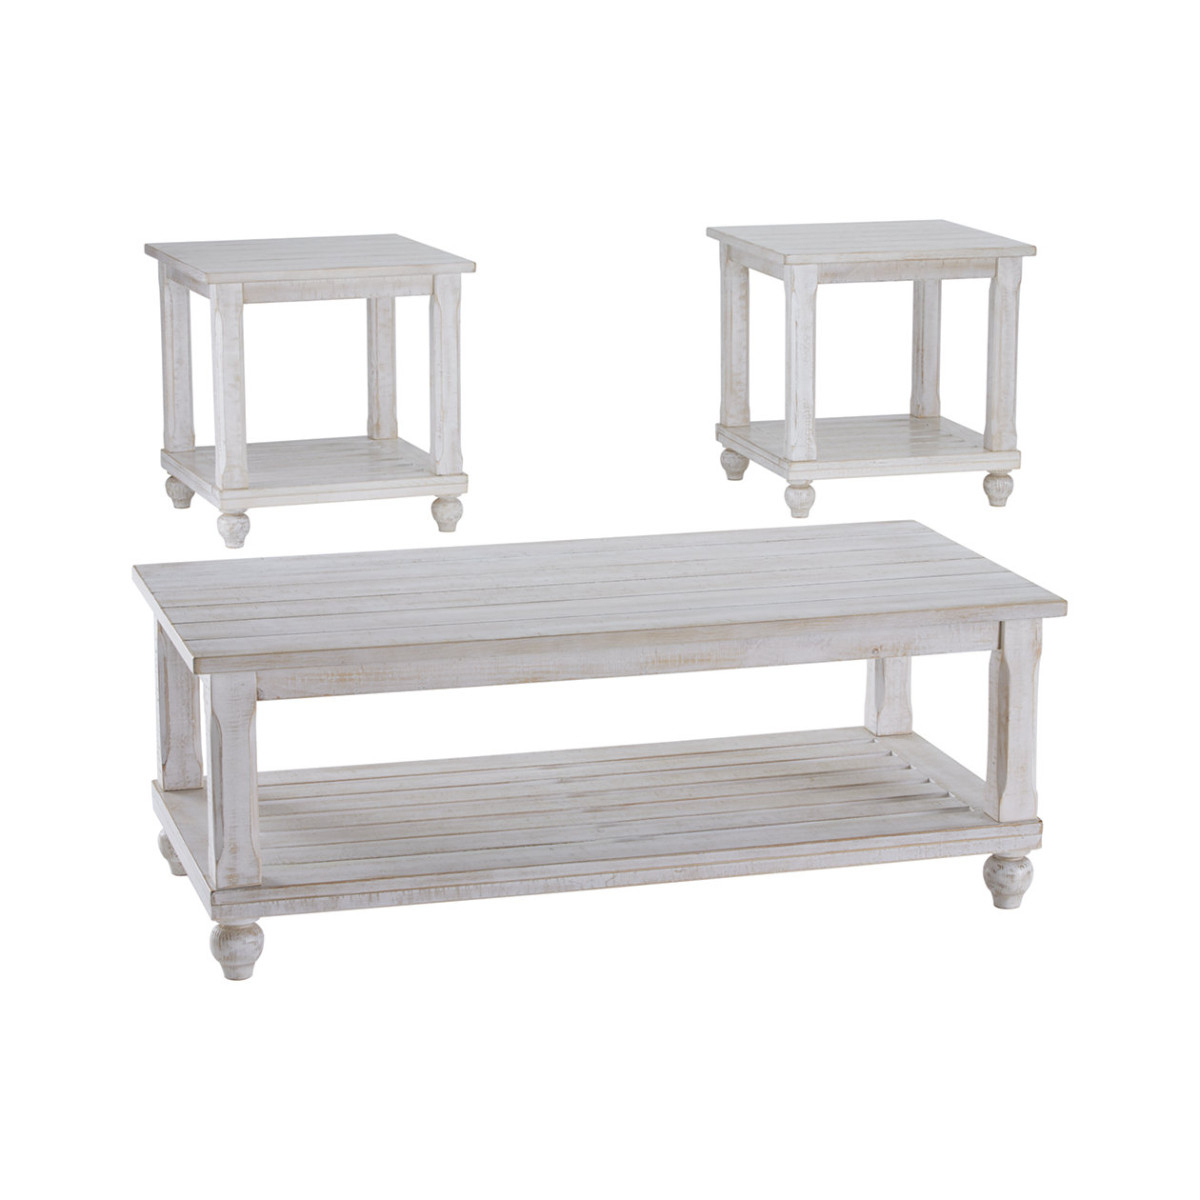 Plank Style Wooden Table Set With Slatted Lower Shelf And Bun Feet, Set Of Three, White- Saltoro Sherpi